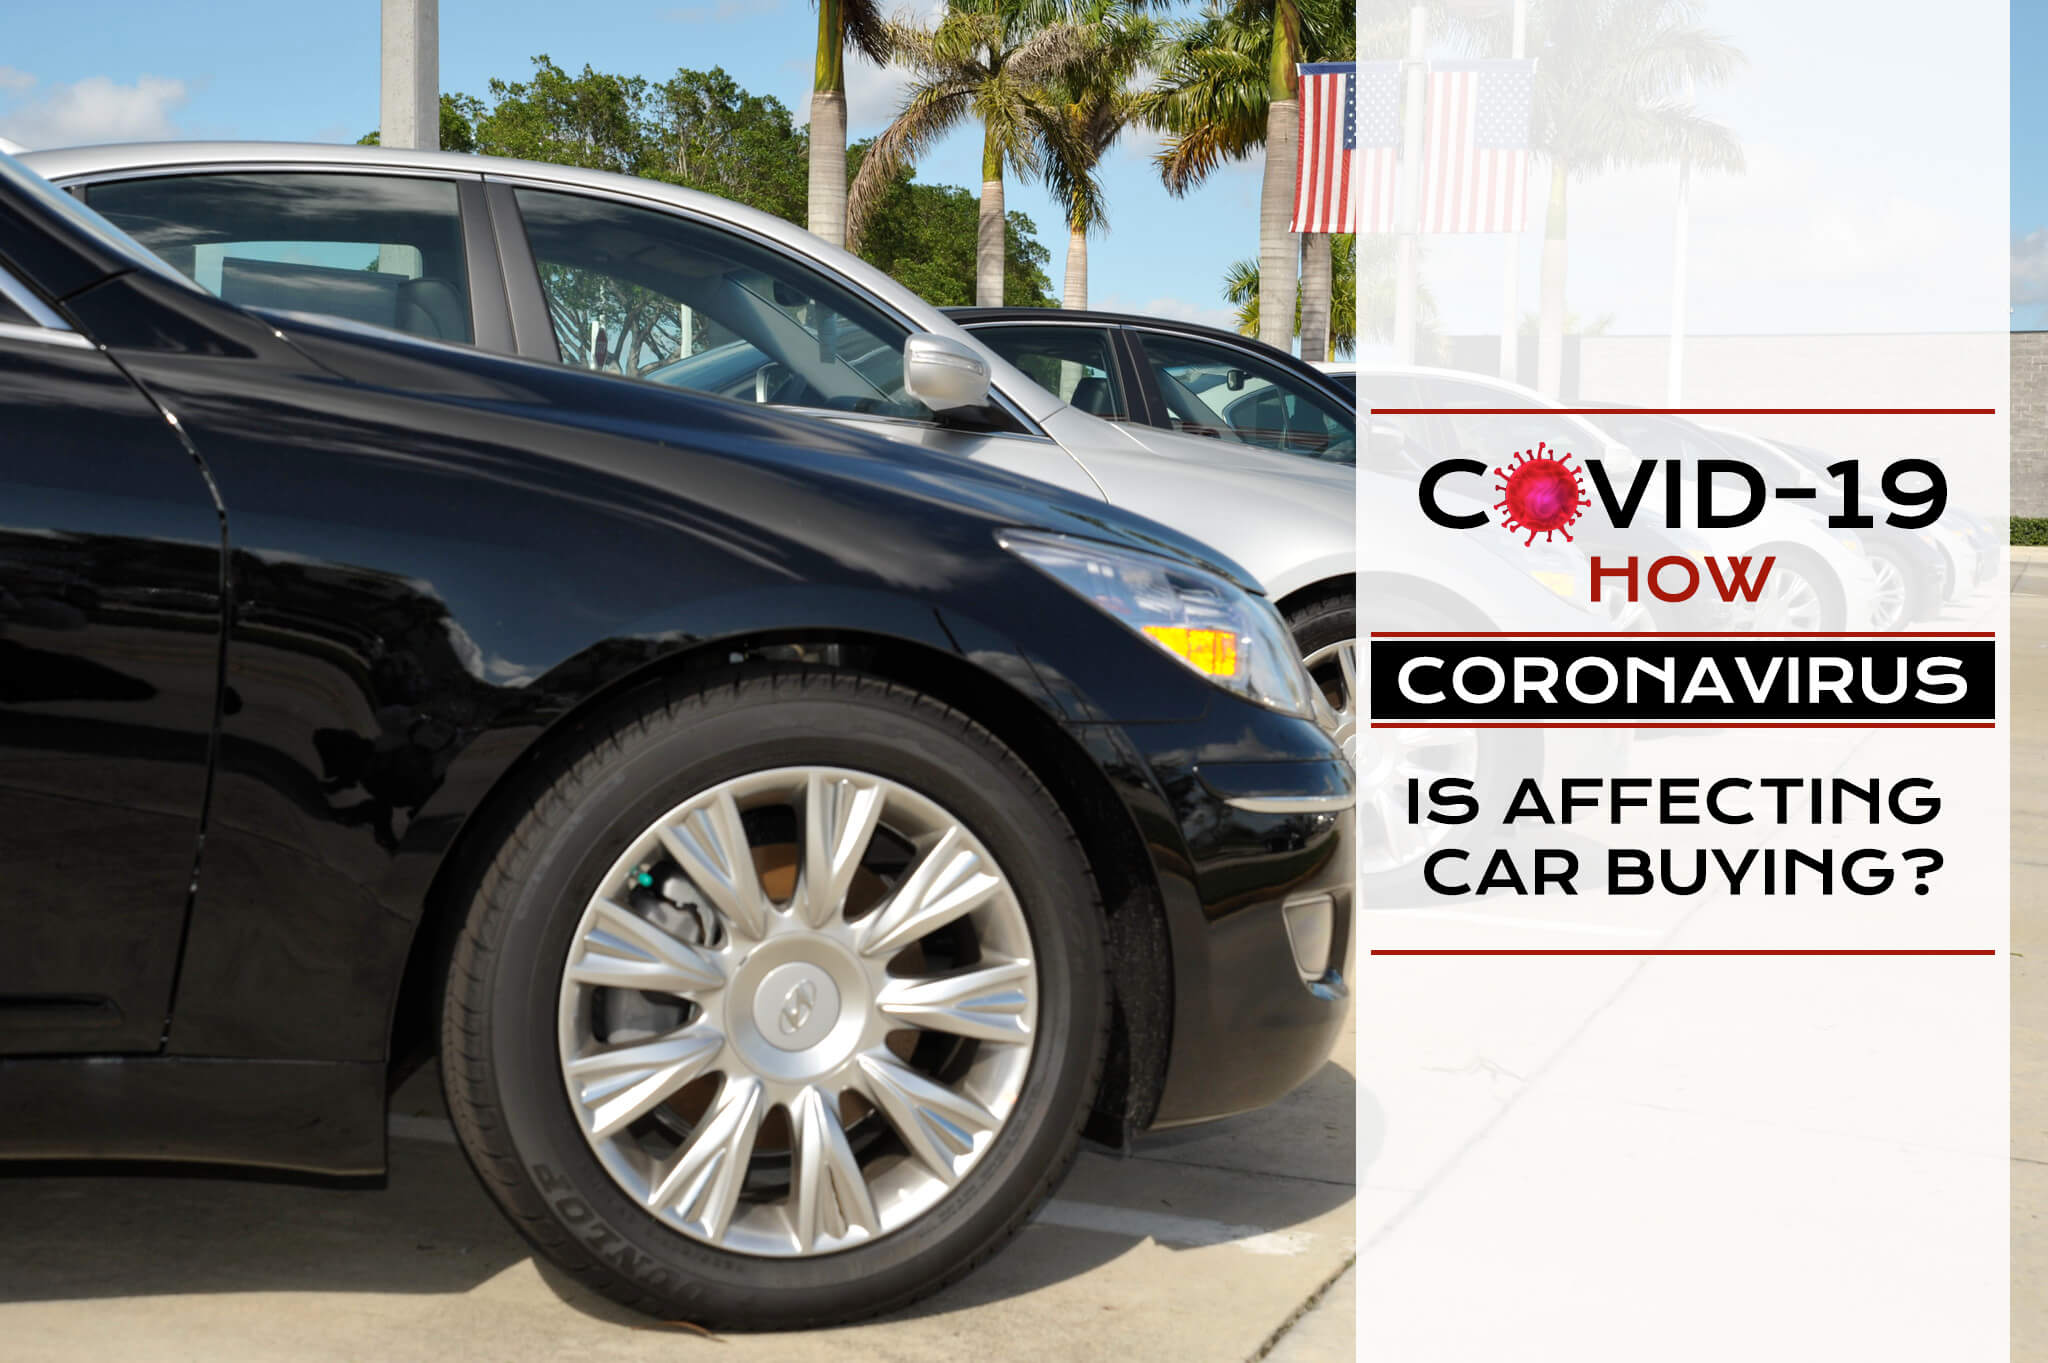 How coronavirus is affecting car buying?